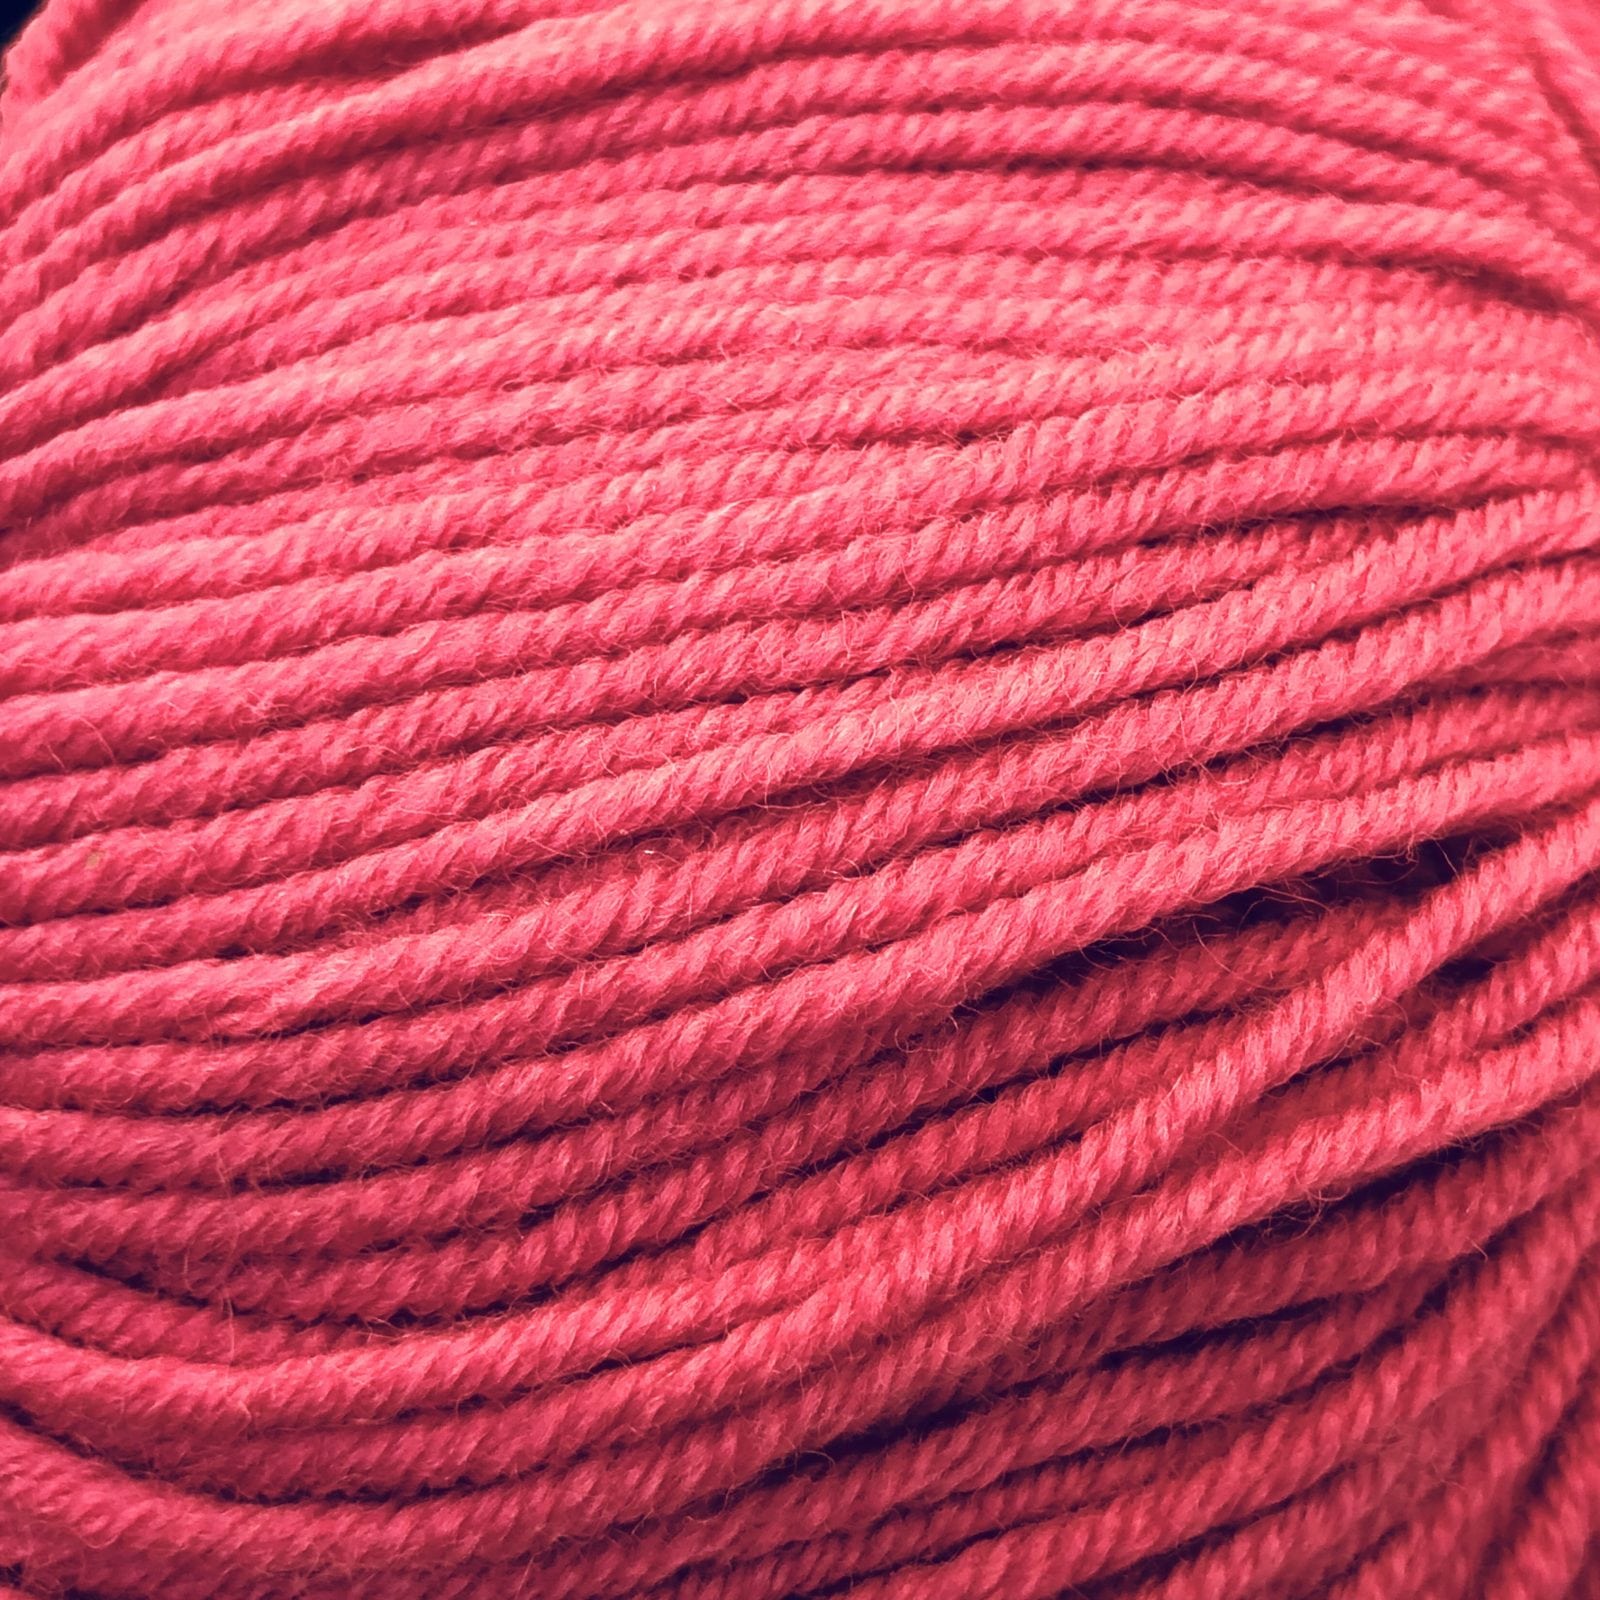 Broadway Yarns Merino 8ply double knit shade 41